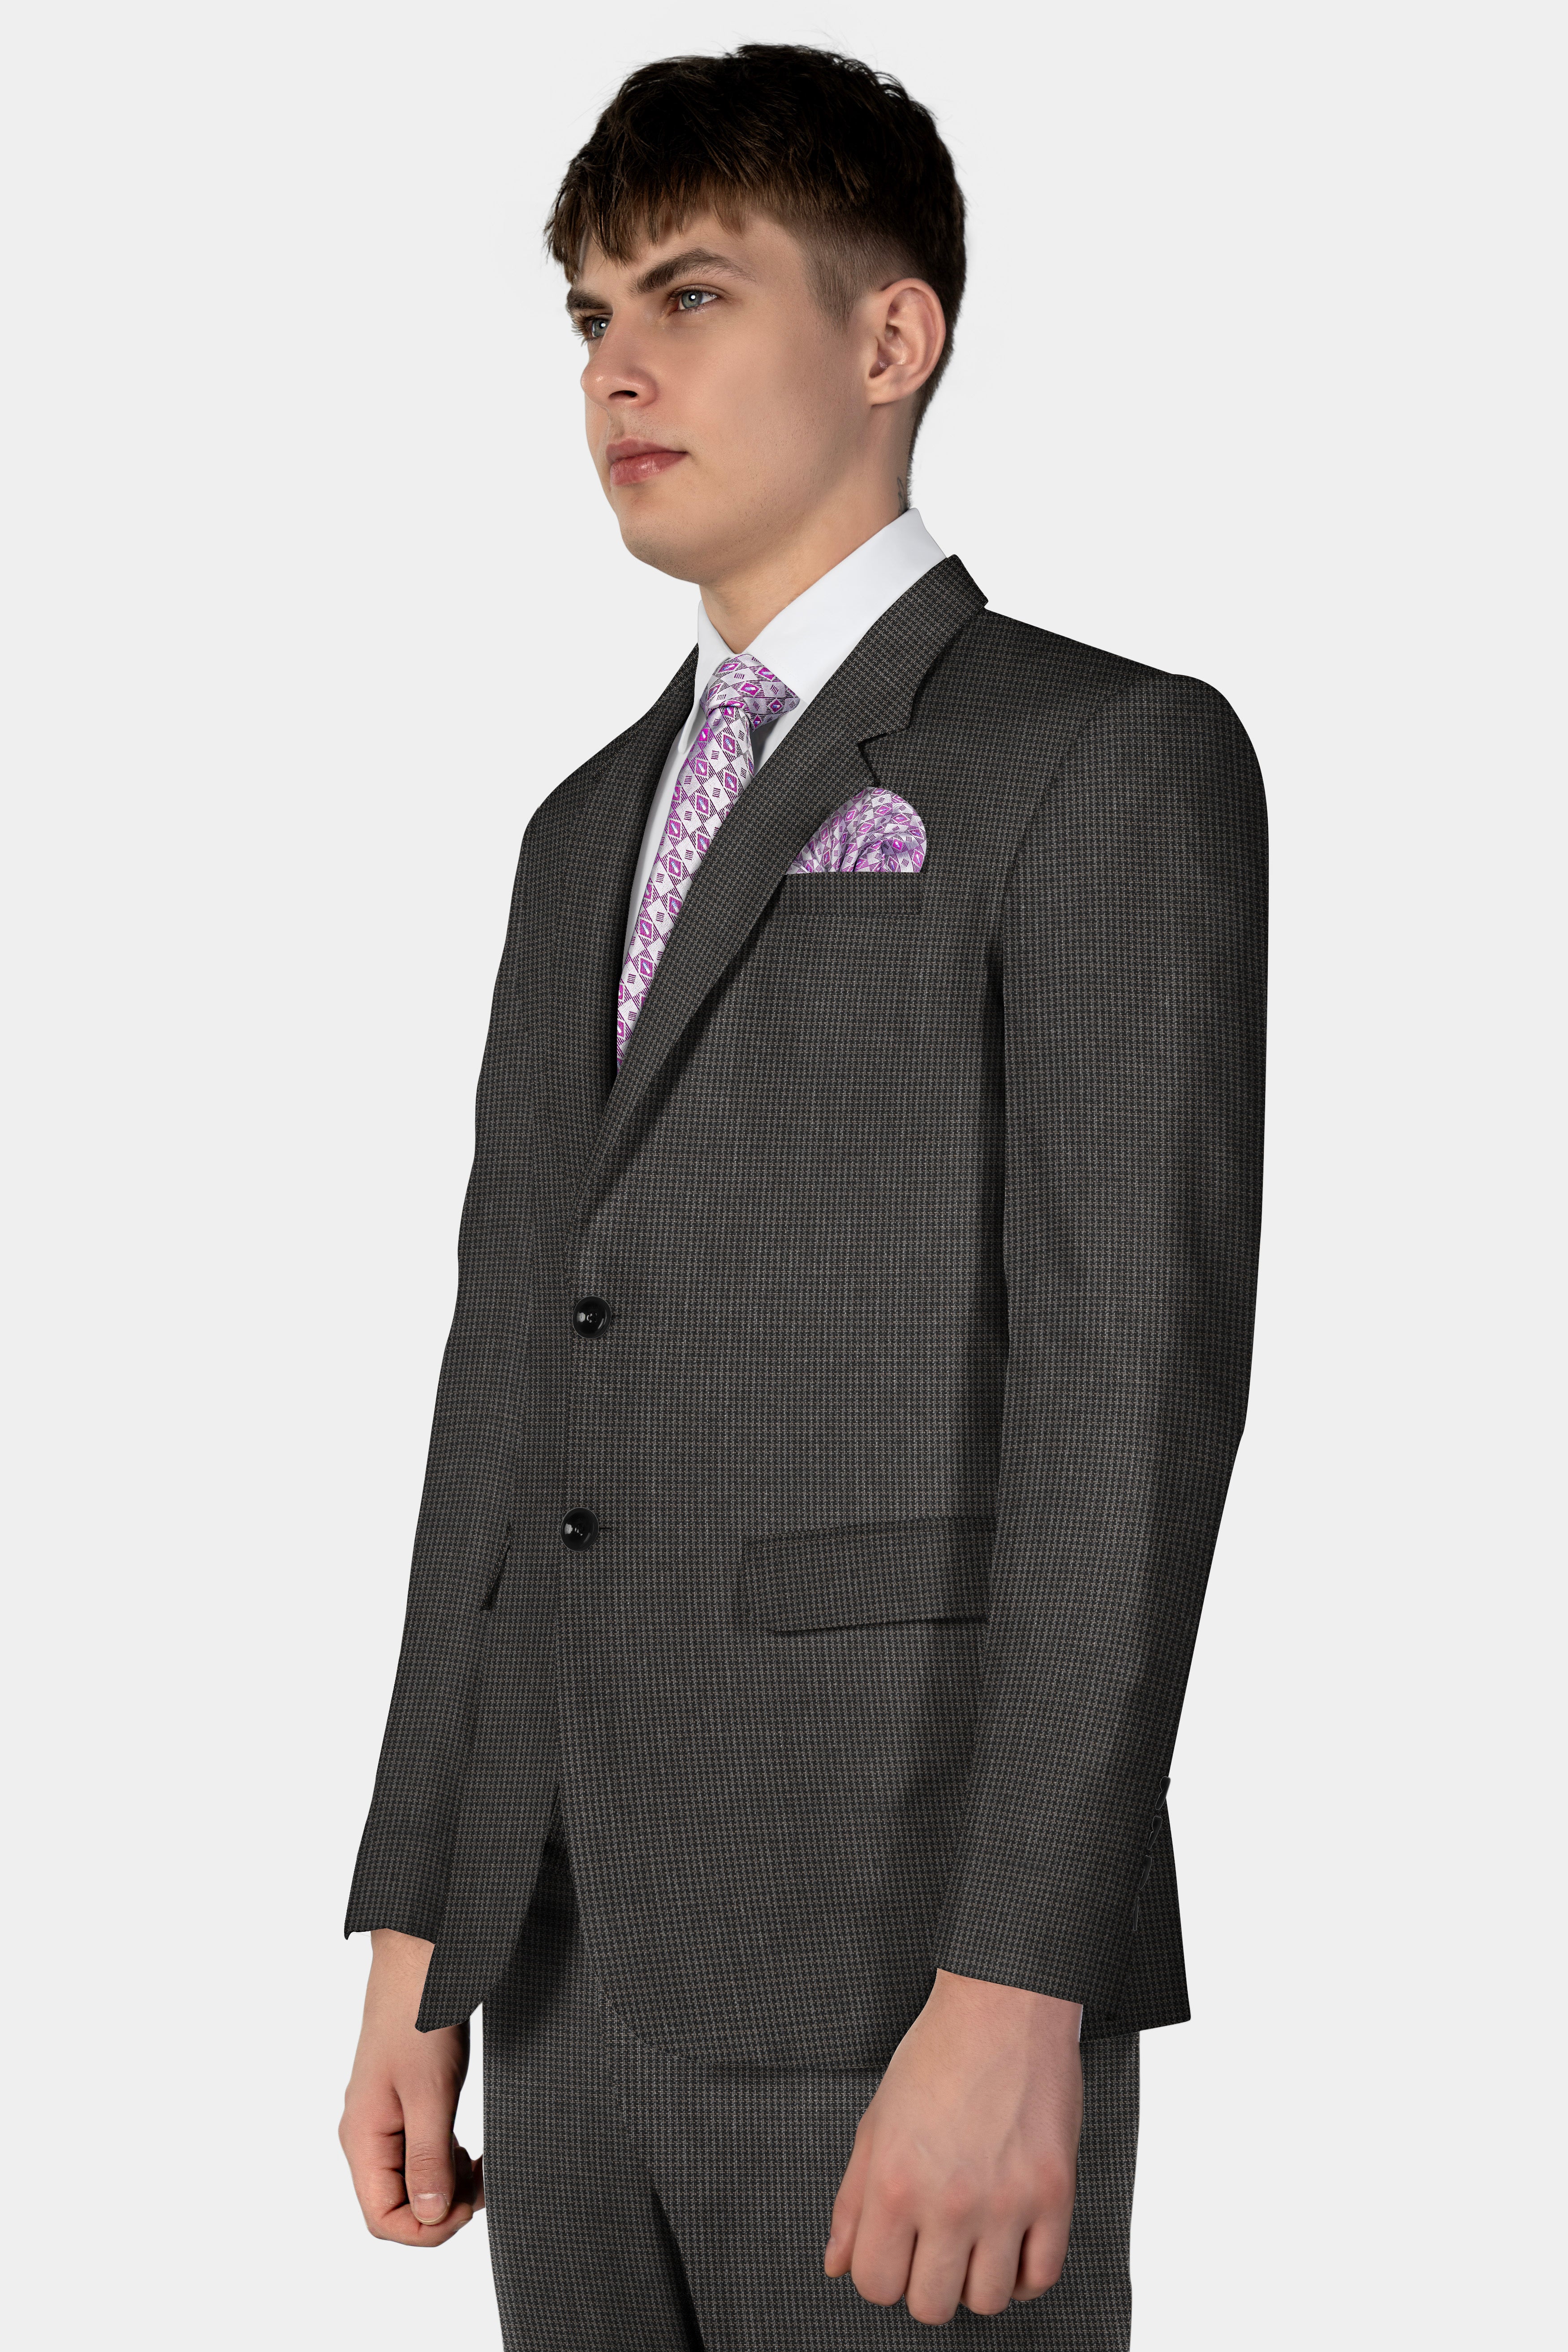 Iridium Brown Micro Checkered Wool Blend Suit